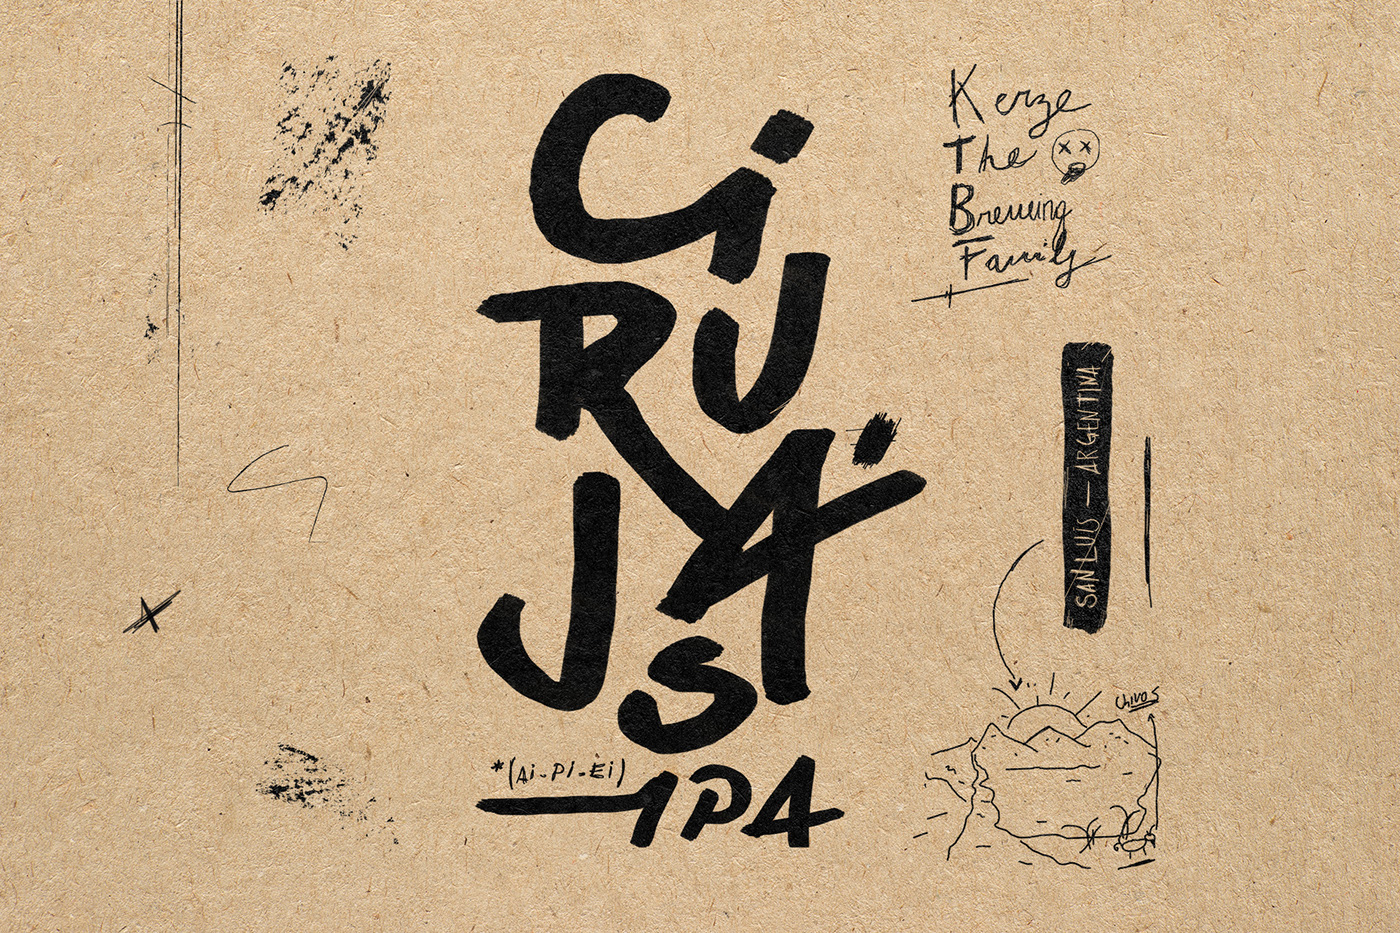 kerze craft beer brewery inspire art direction  labels Packaging branding  ILLUSTRATION 